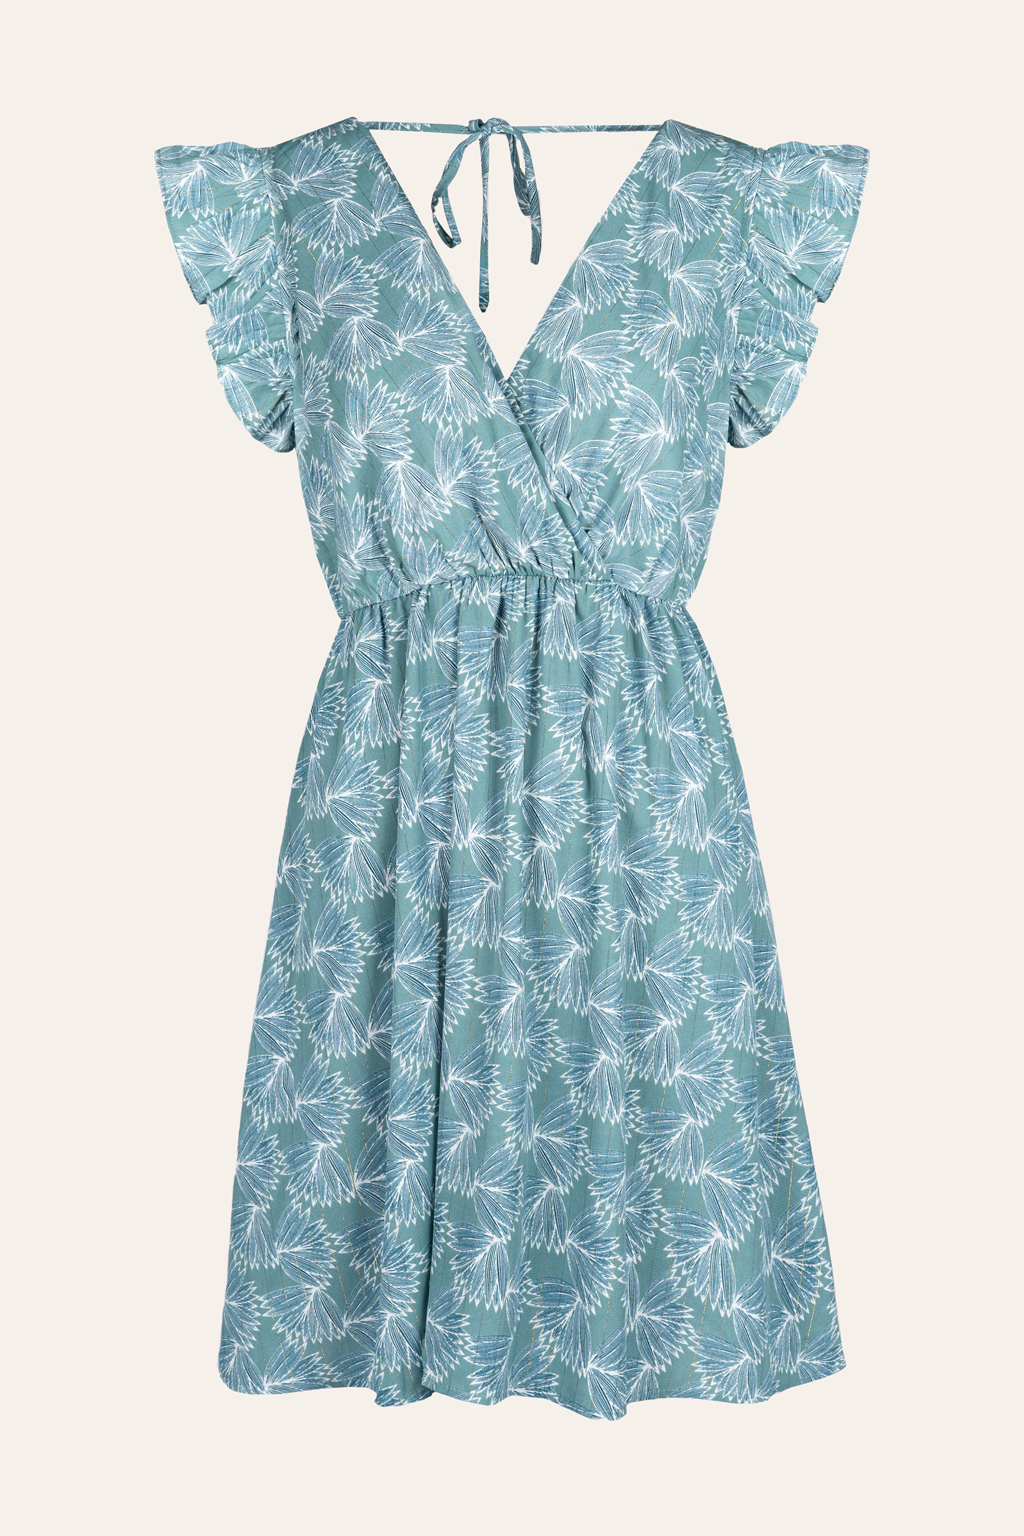 Kurzes Kleid mit Blumenprint (Blau-Grün)